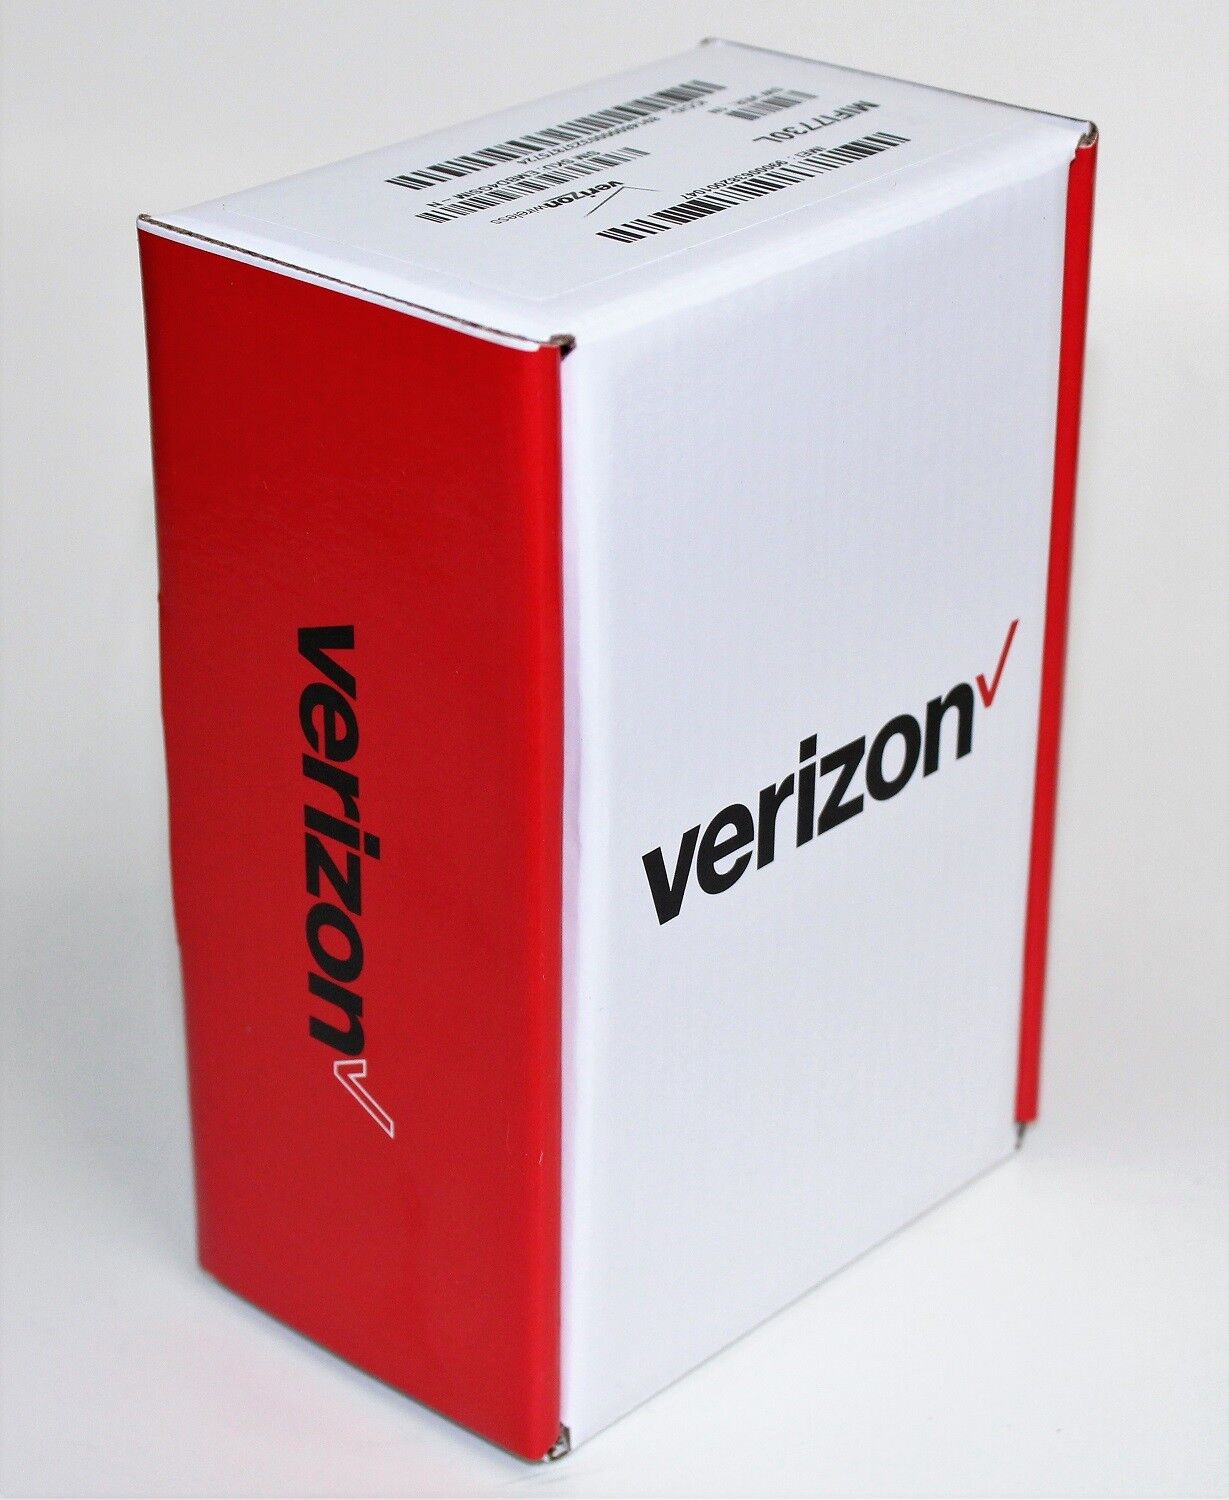 Verizon MiFi 8800L Jetpack 4g LTE Mobile Hotspot Modem Broadband Novatel 21